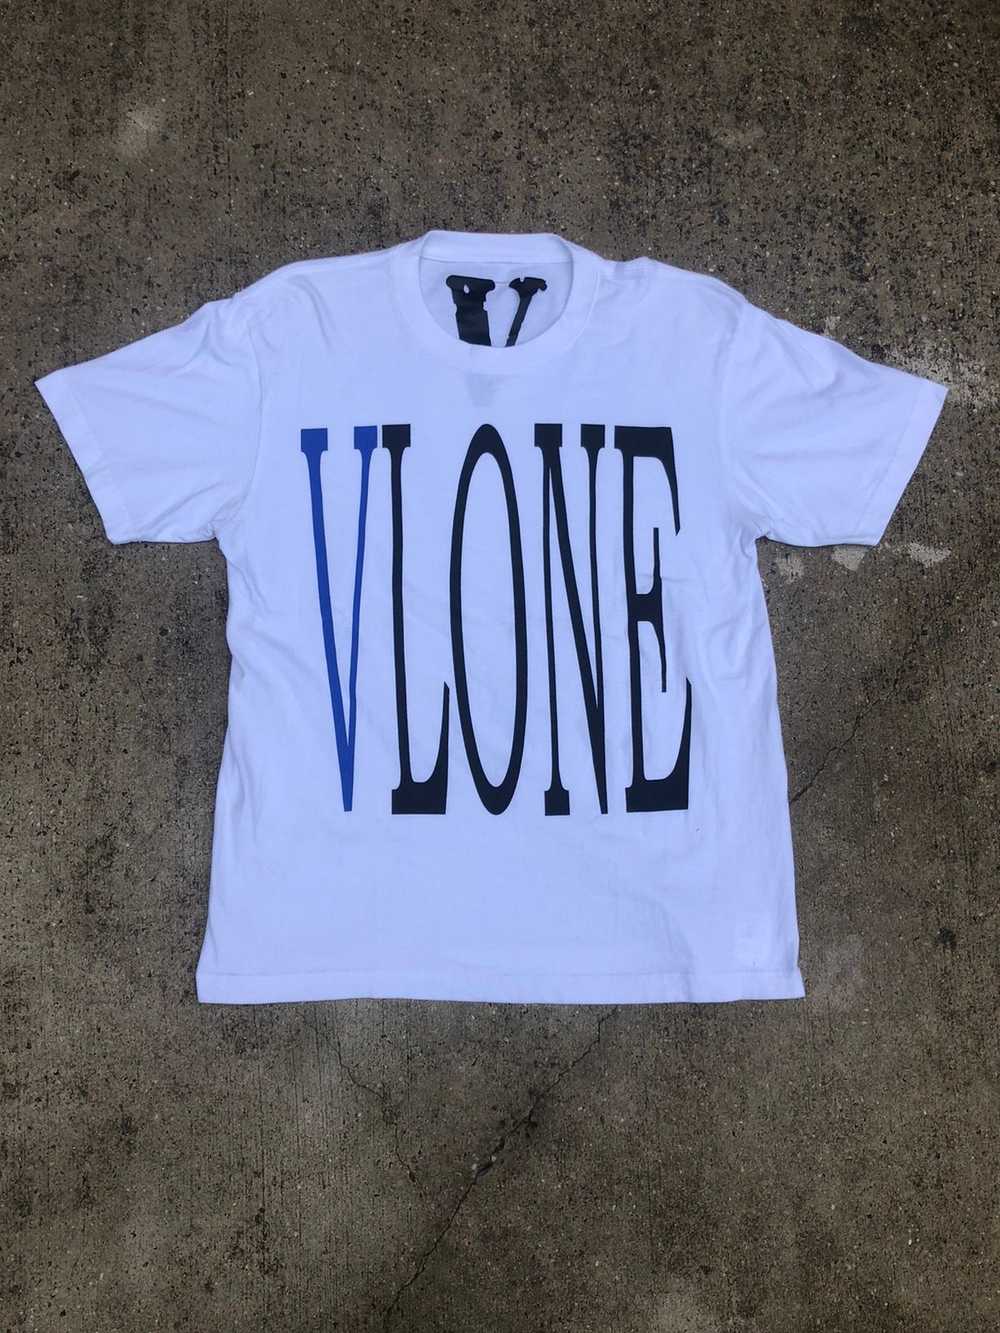 Vlone Vlone T-Shirt - image 1